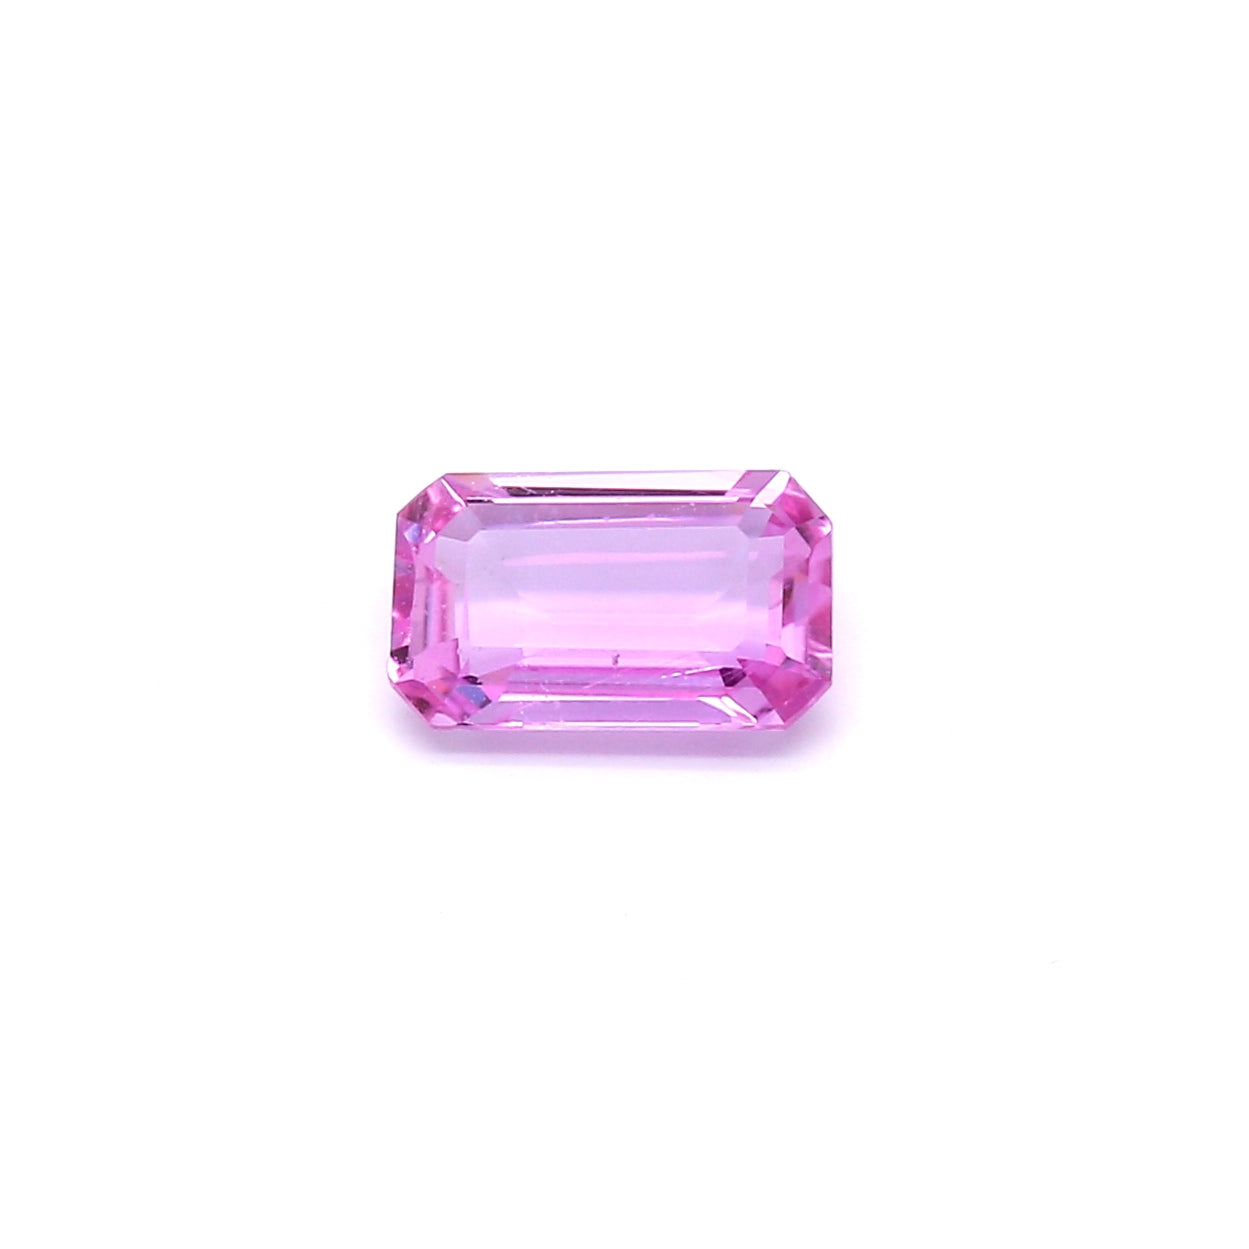 1.07ct Pink, Octagon Sapphire, Heated, Madagascar - 7.74 x 4.71 x 2.54mm